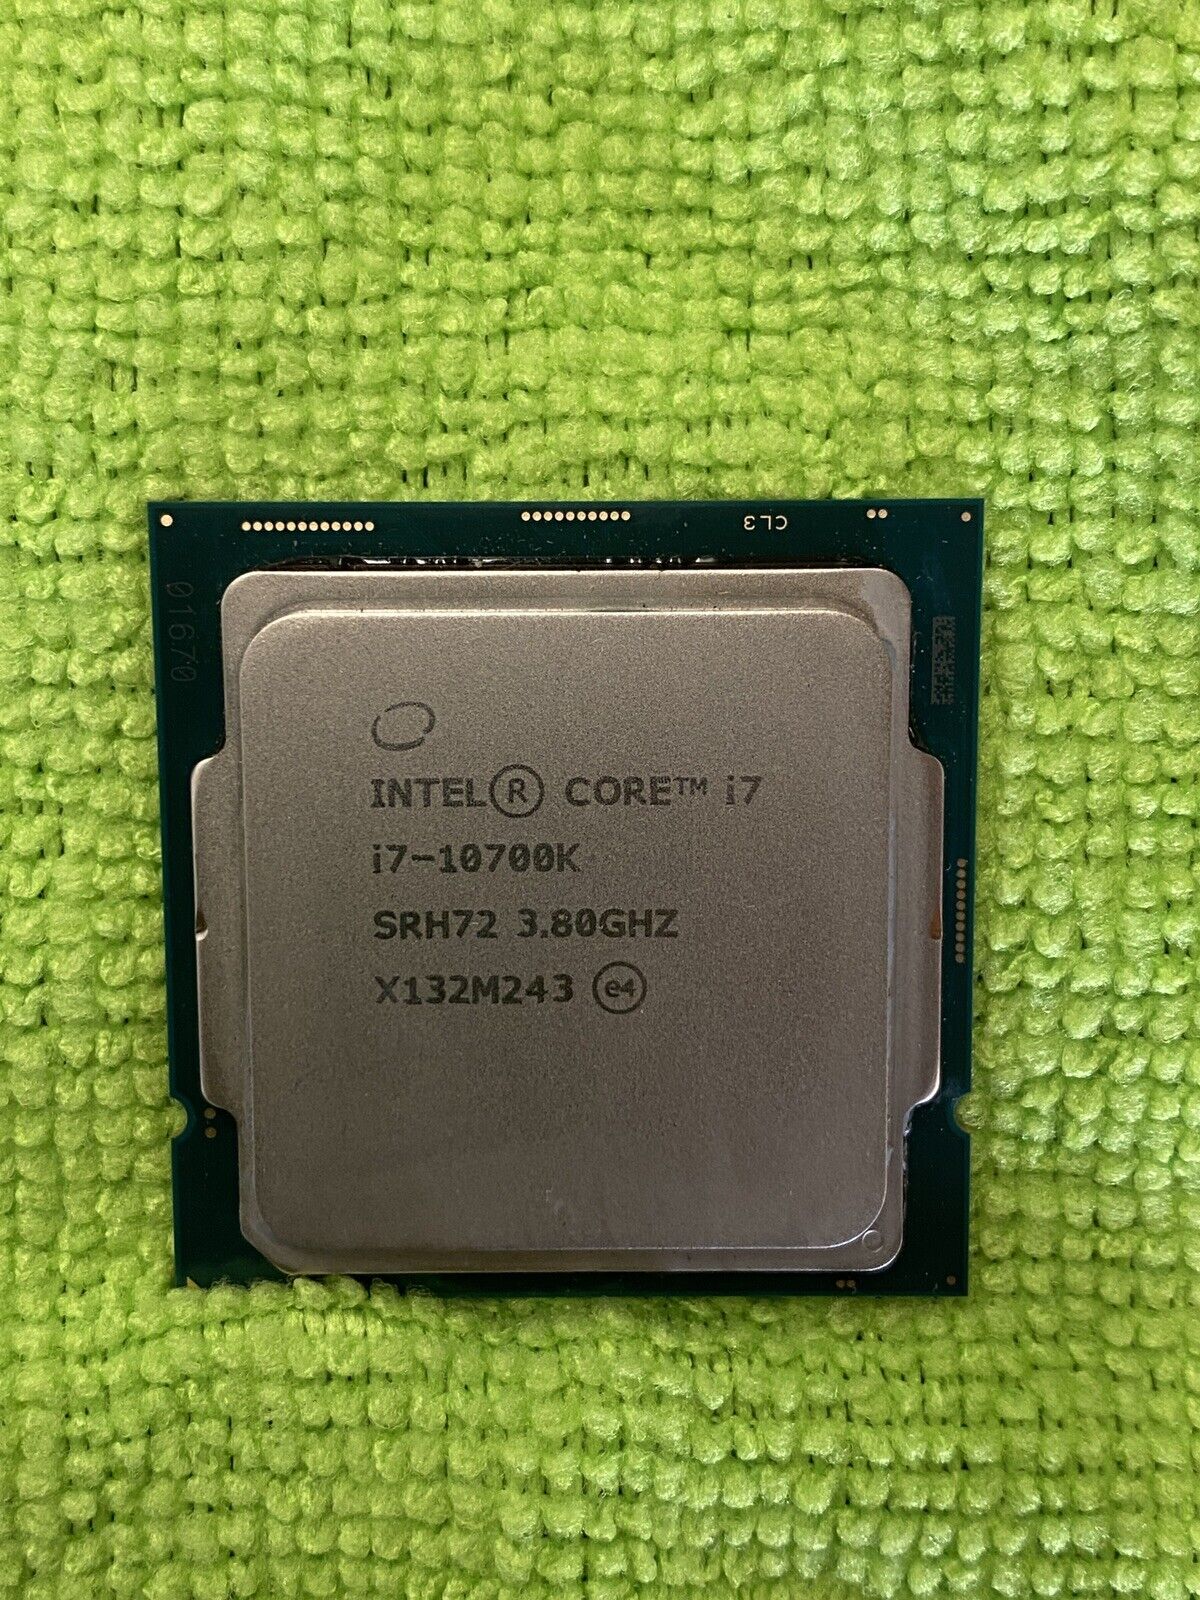 Intel® Core™ i7-10700K 3.80GHz 8-Core Processor (SRH72) TDP 95W LGA1200